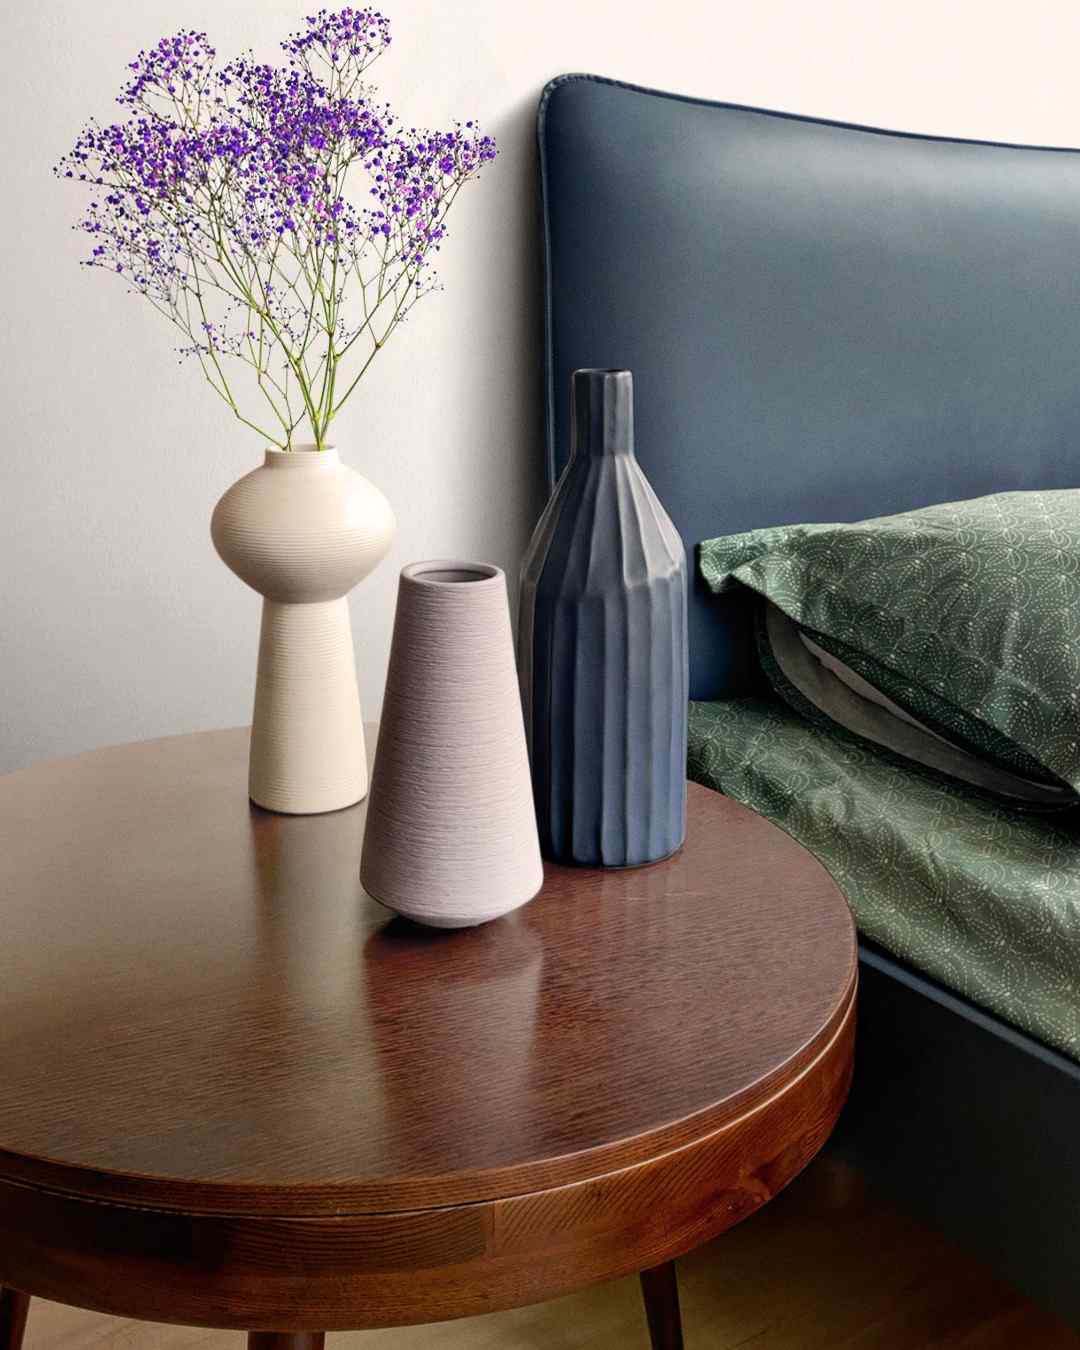 Morandi Bottle Vase